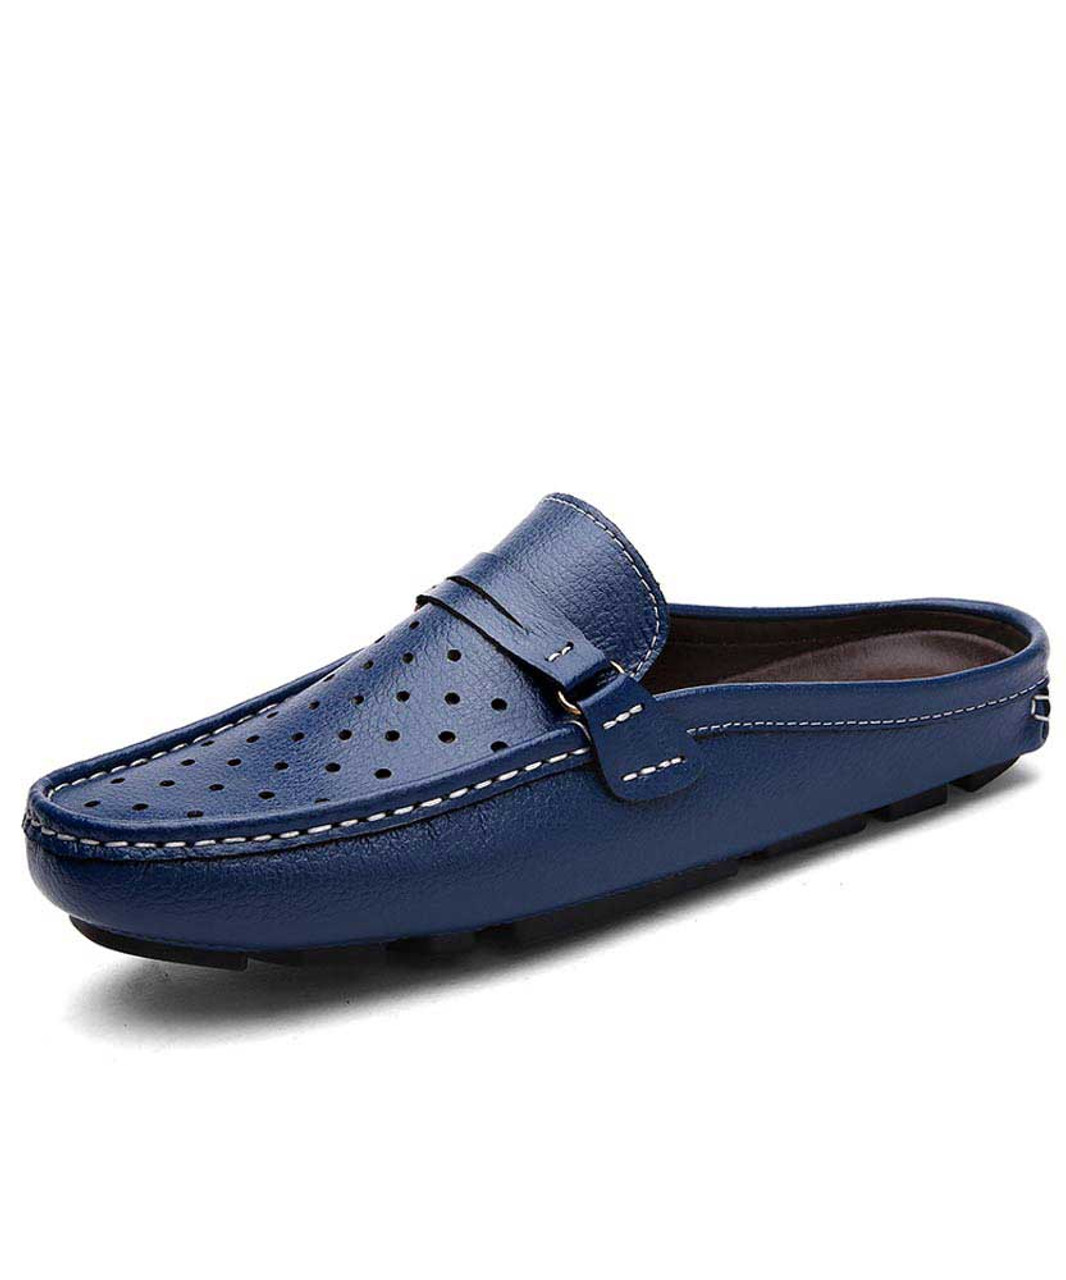 Blue hollow leather slip on half shoe 